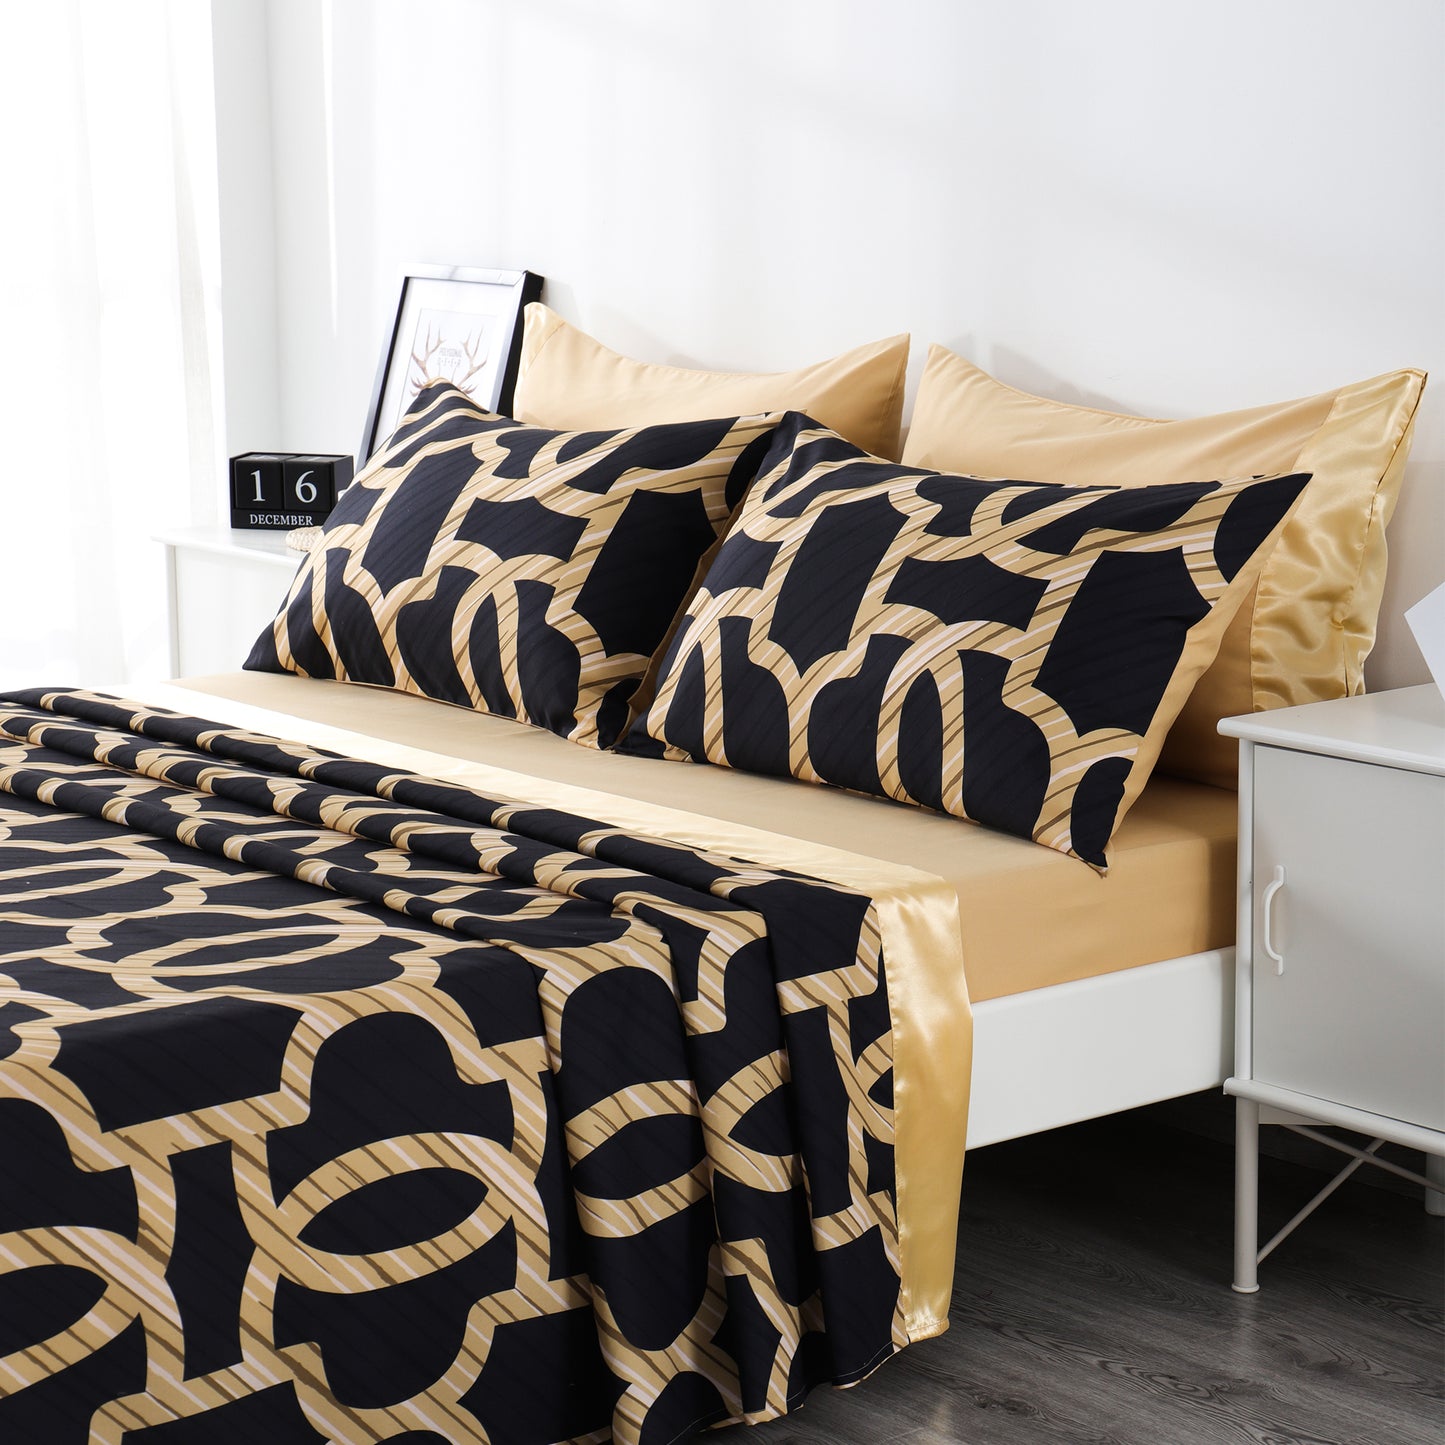 6 Piece Bed Sheet set-Black Gold